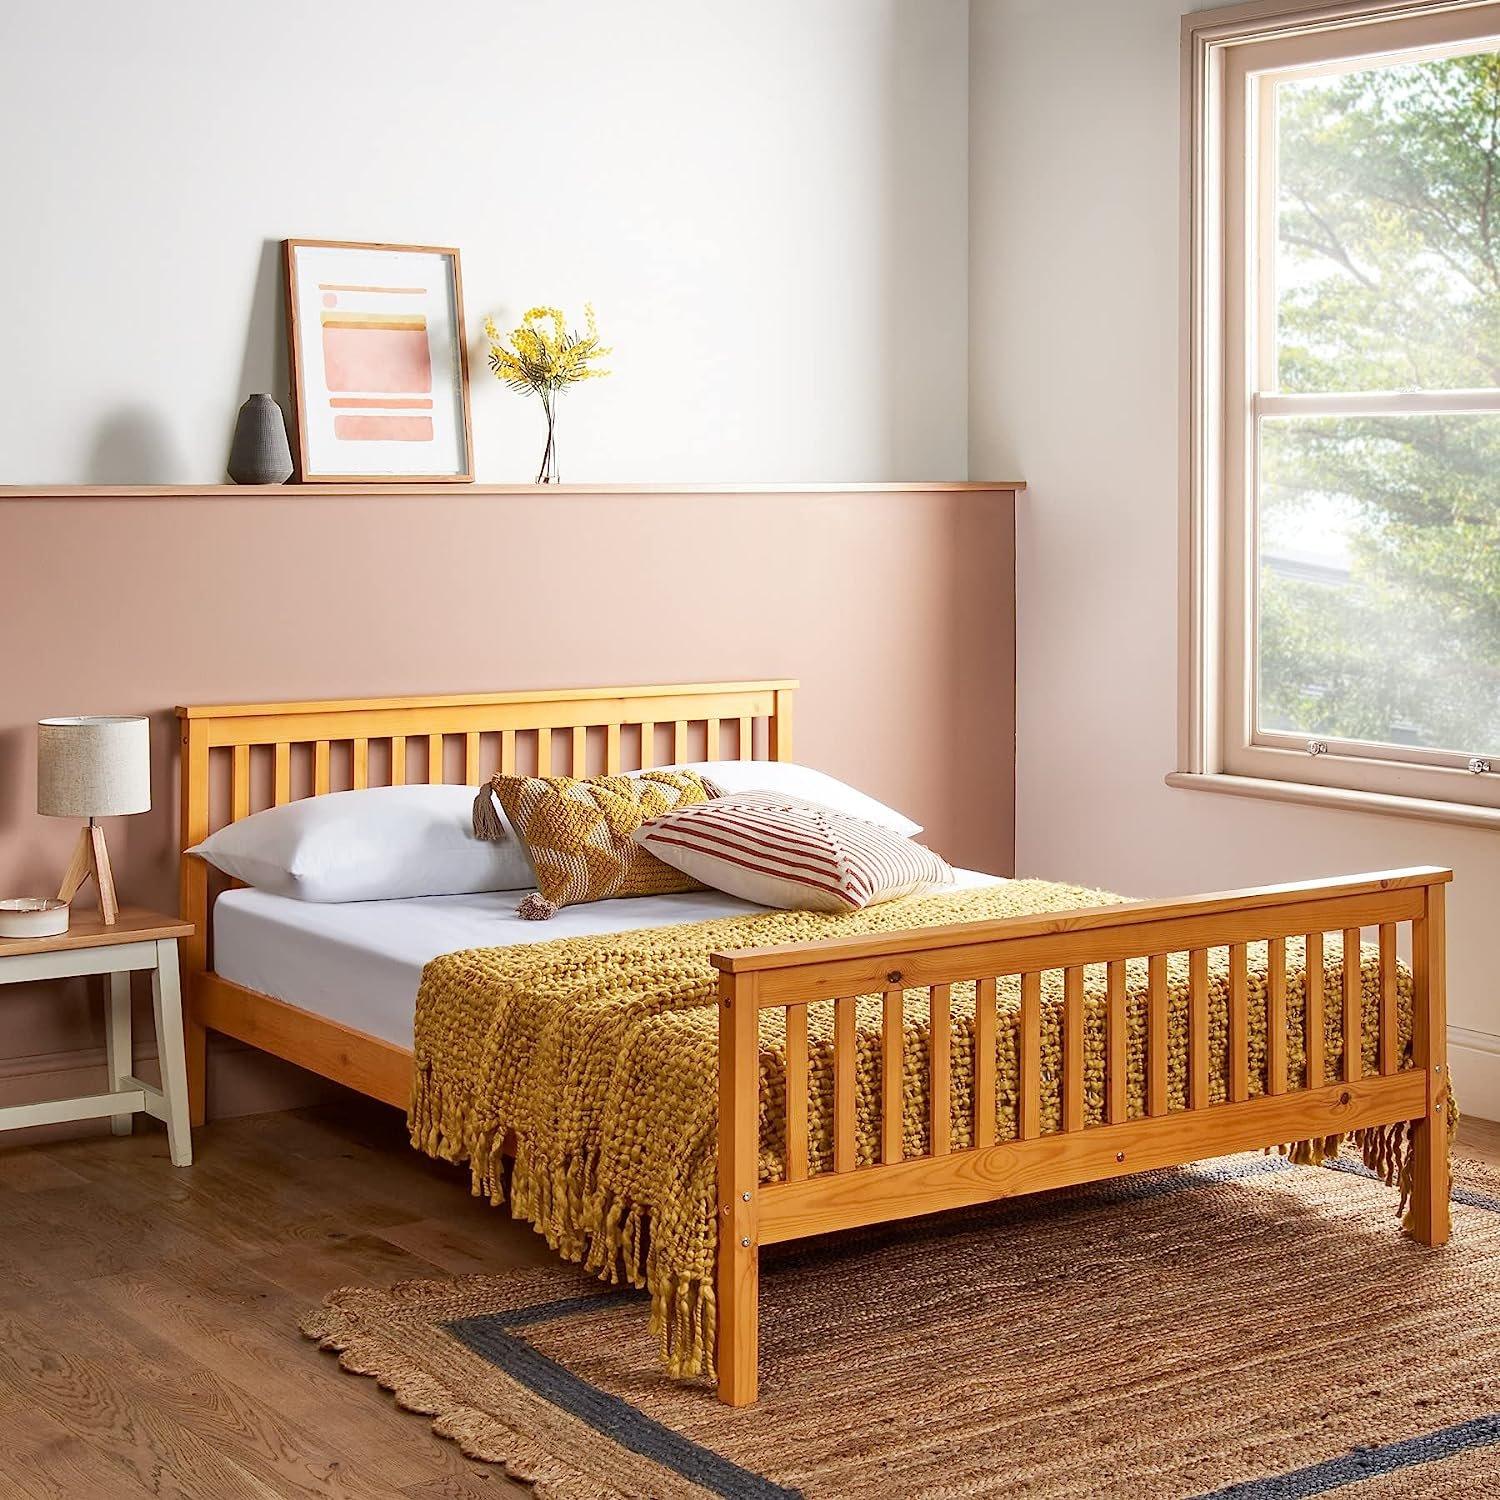 Pine Wooden Bed Frame With Pocket Sprung Mattress